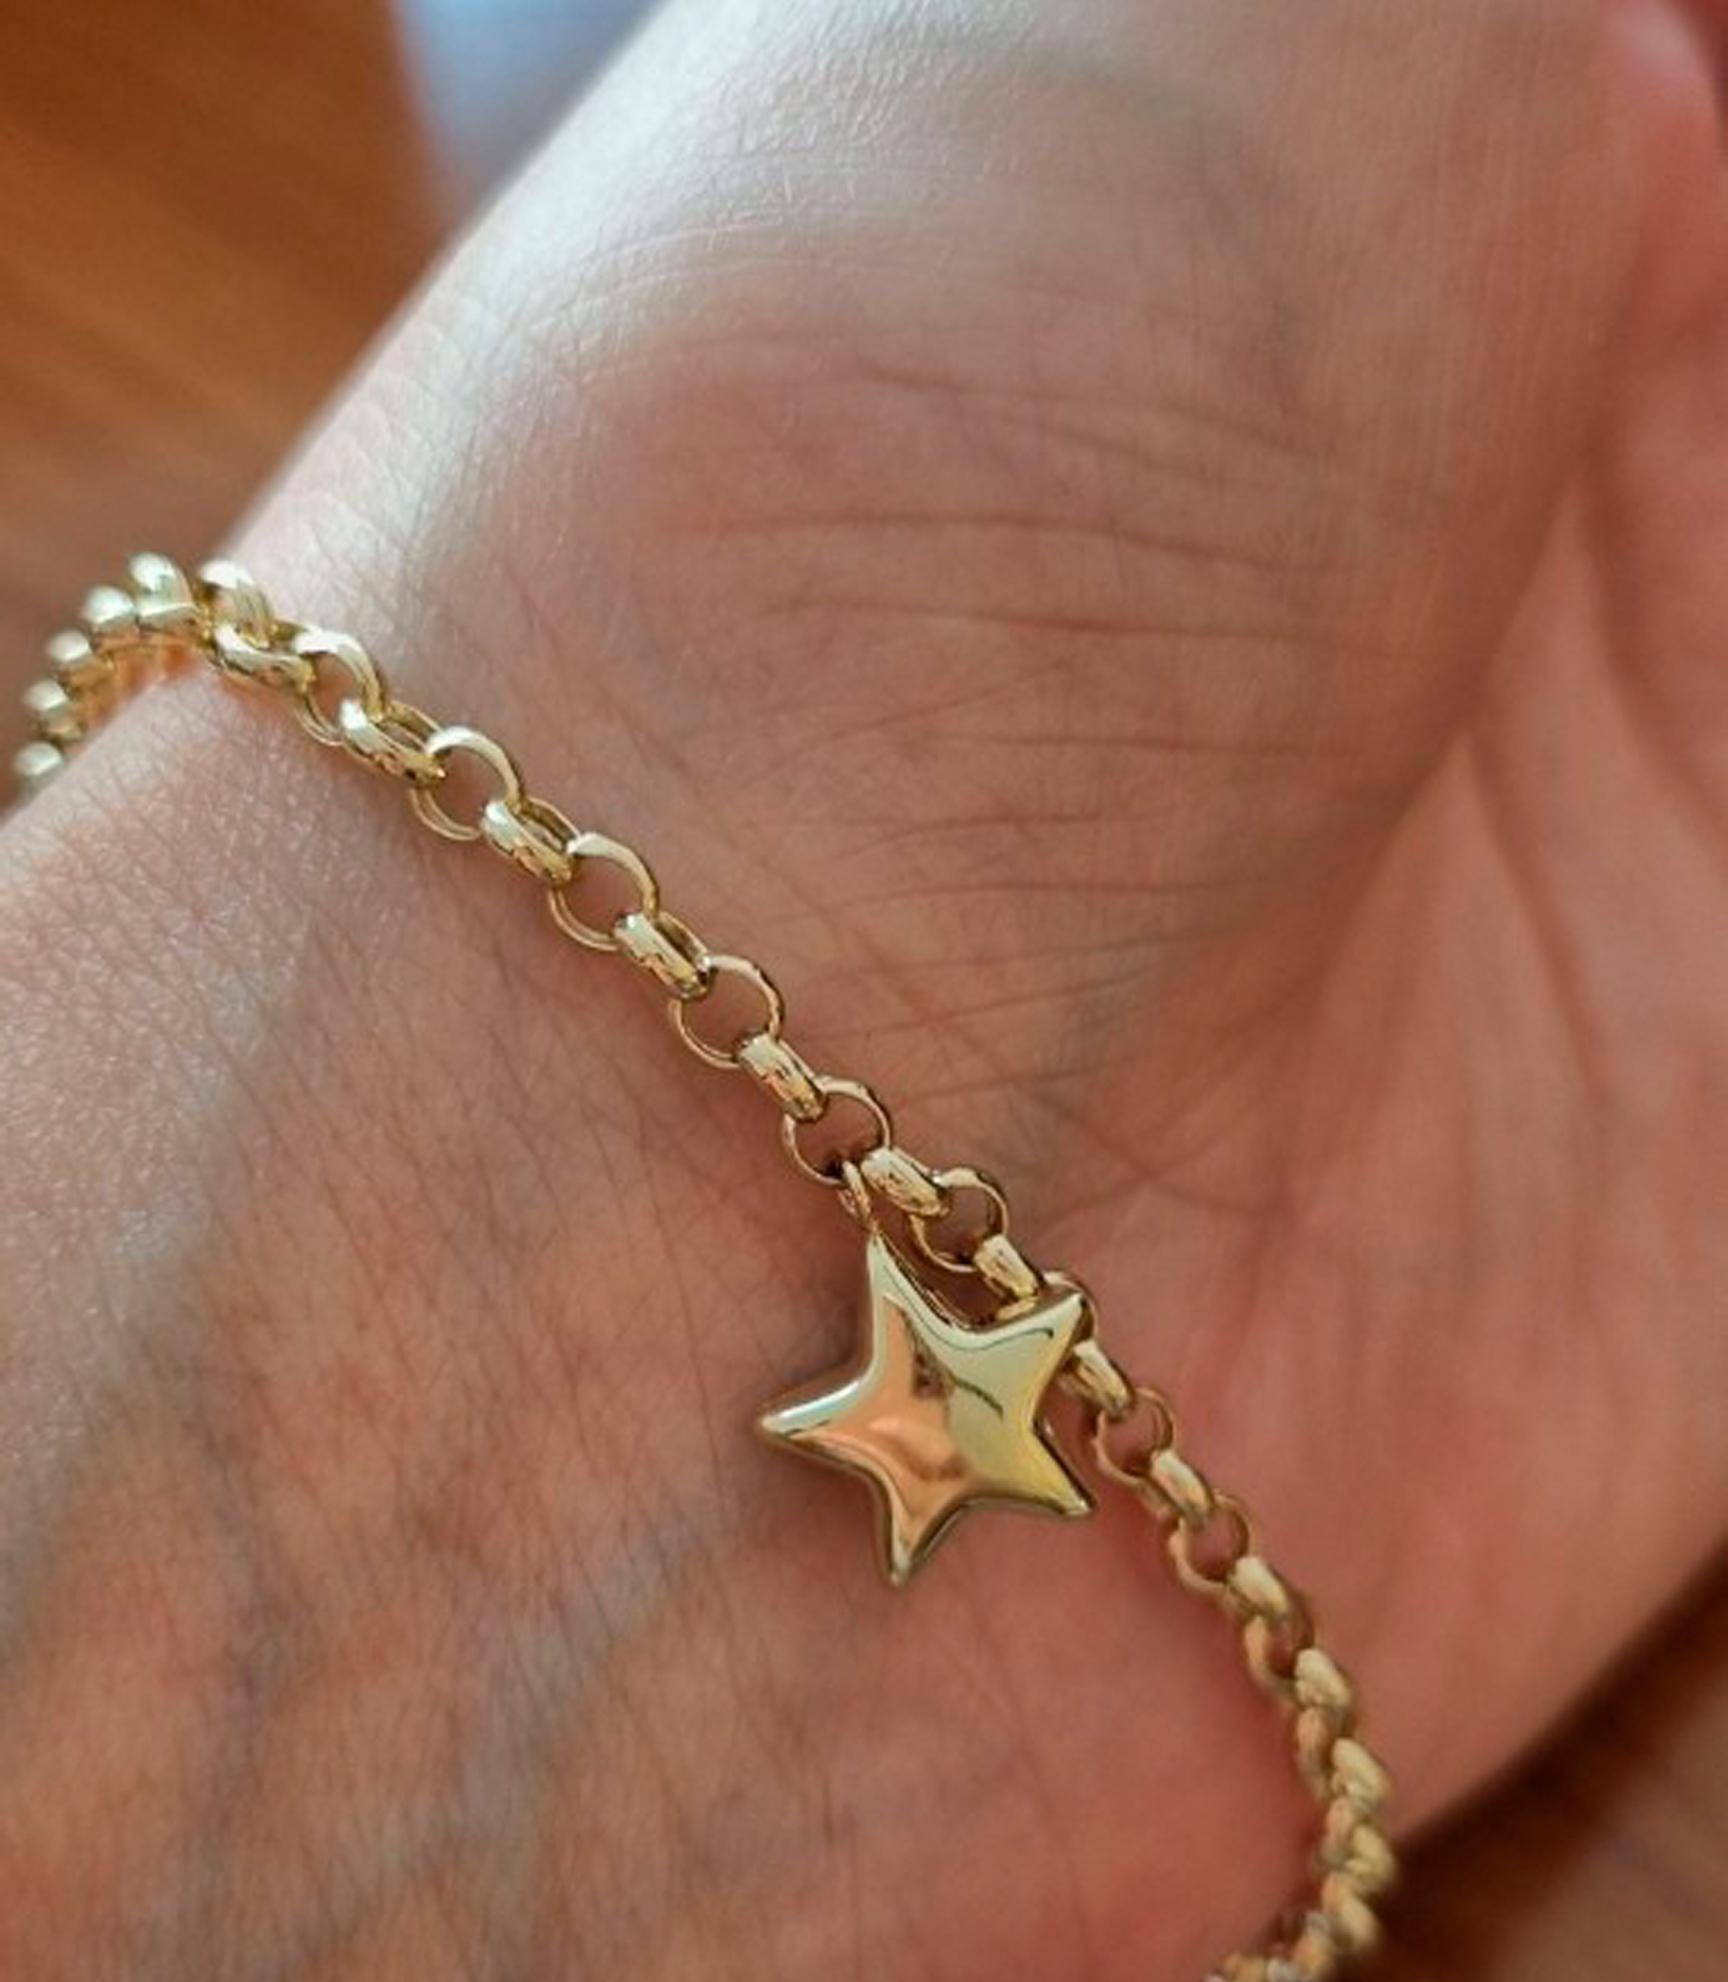 Modern 14 karat gold Star Charm Bracelet. Chain Bracelet with Star shaped pendant. For Sale